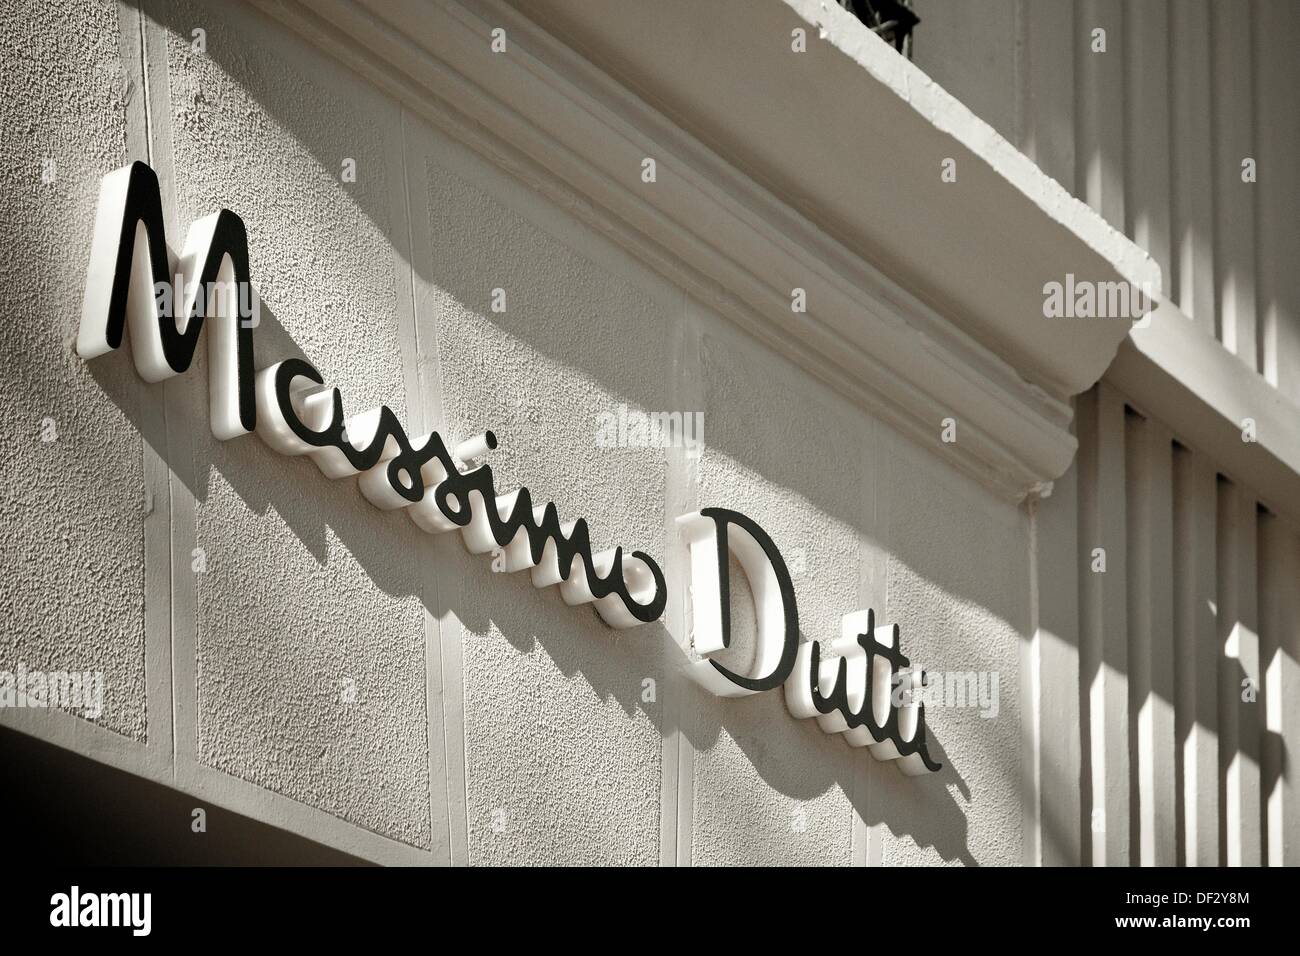 Massimo Dutti shop in Serrano Street, Madrid Spain Stock Photo - Alamy